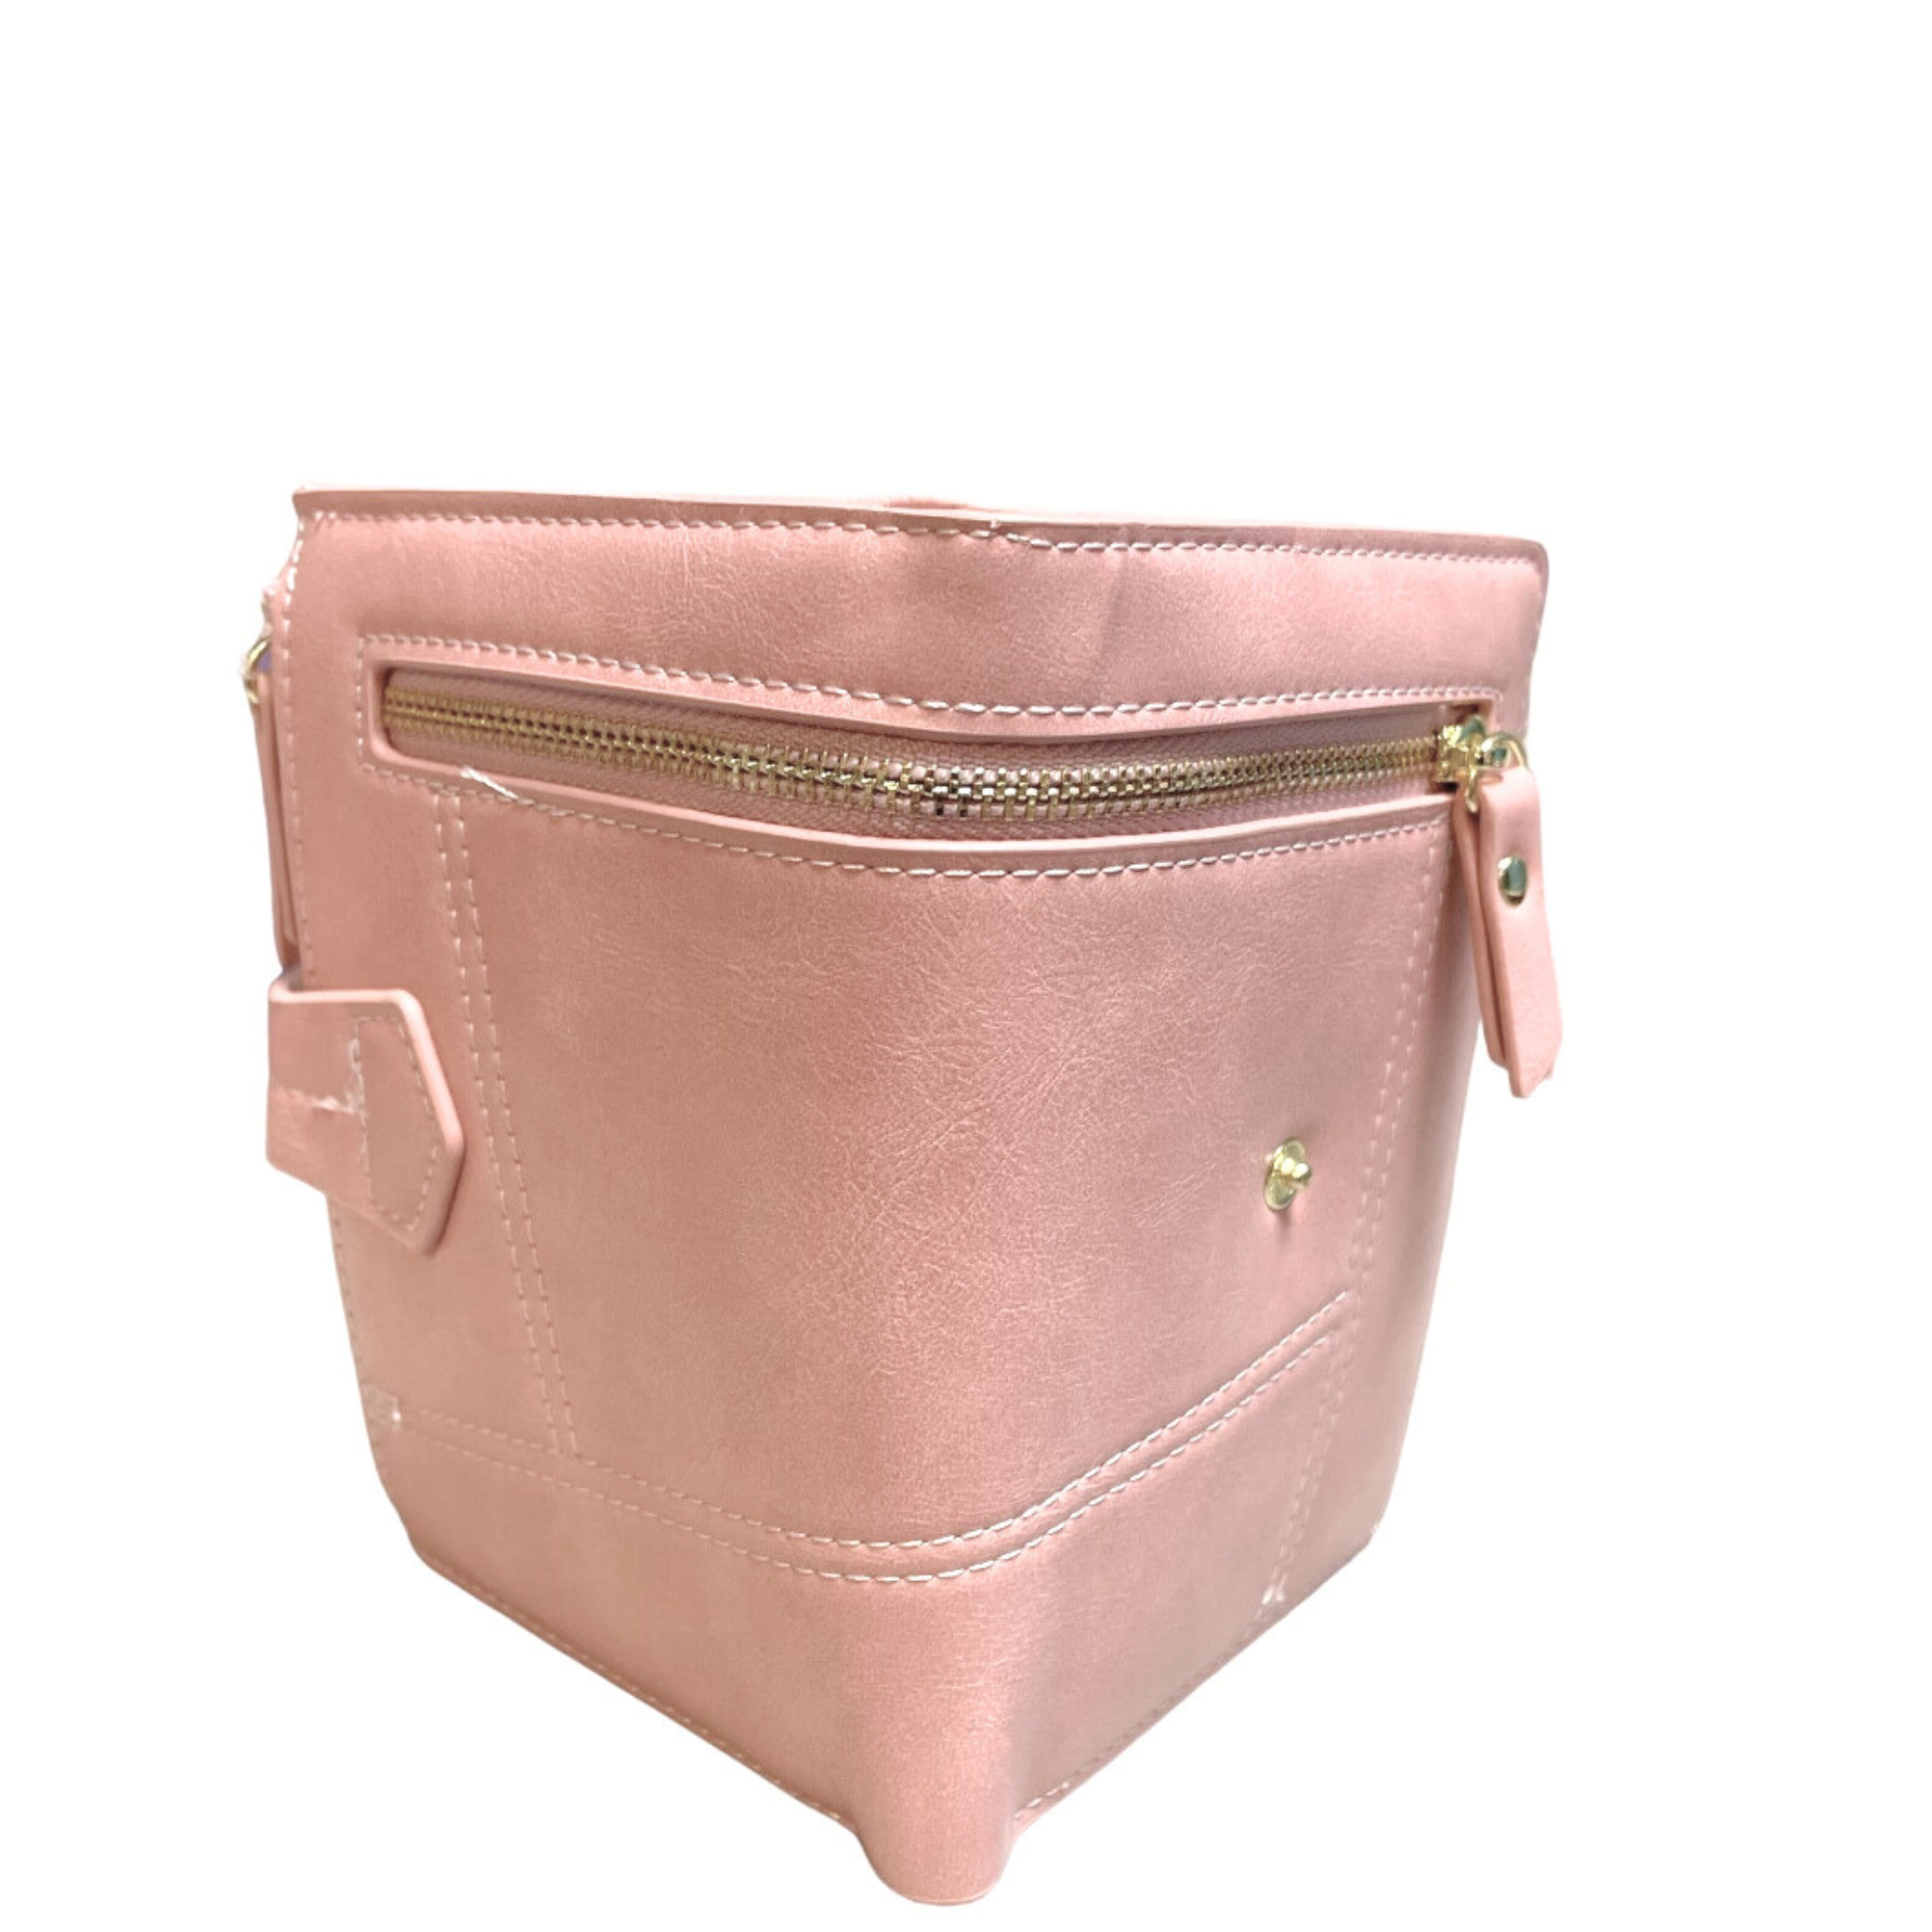 Minimalist Zipper Wallet | Vegan Leather